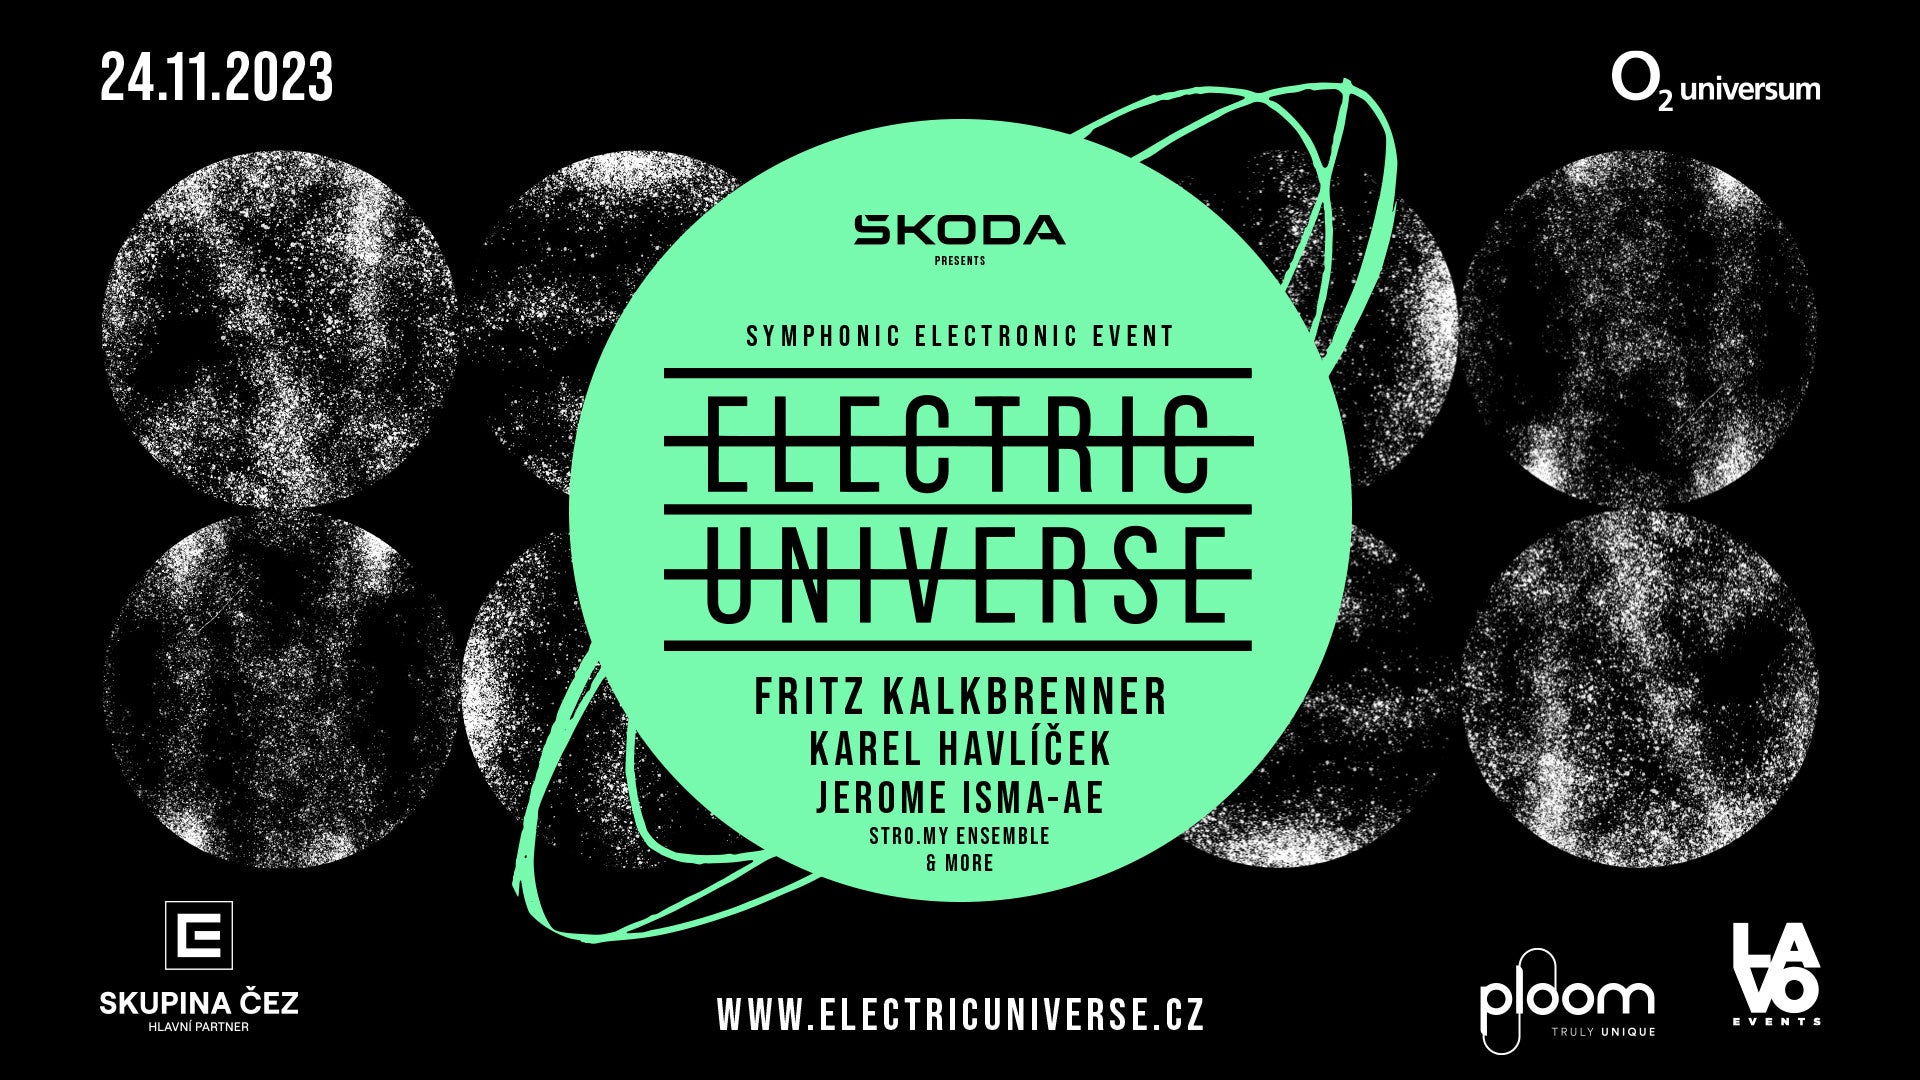 Electric Universe- Praha -O2 universum Praha 9 Českomoravská 2345/17, Praha 9 19000